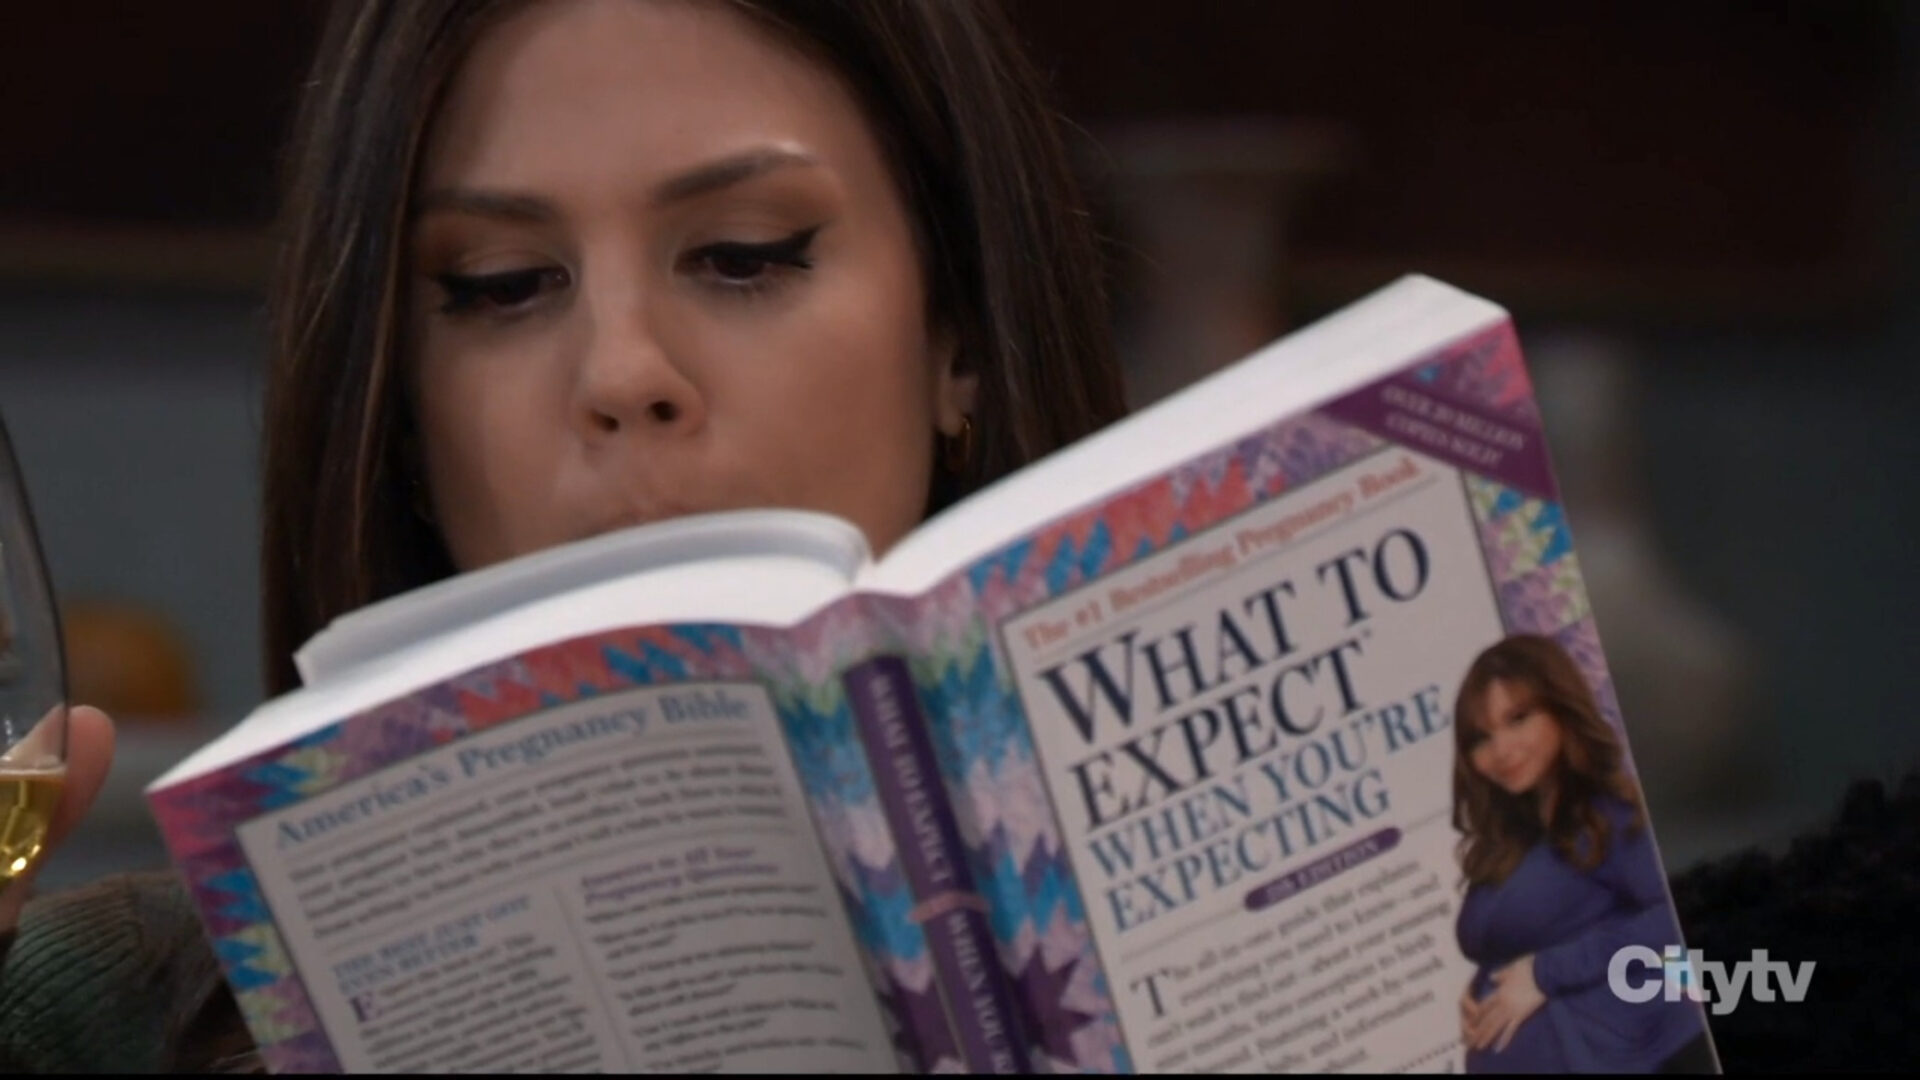 Kristina reads pregnancy books.